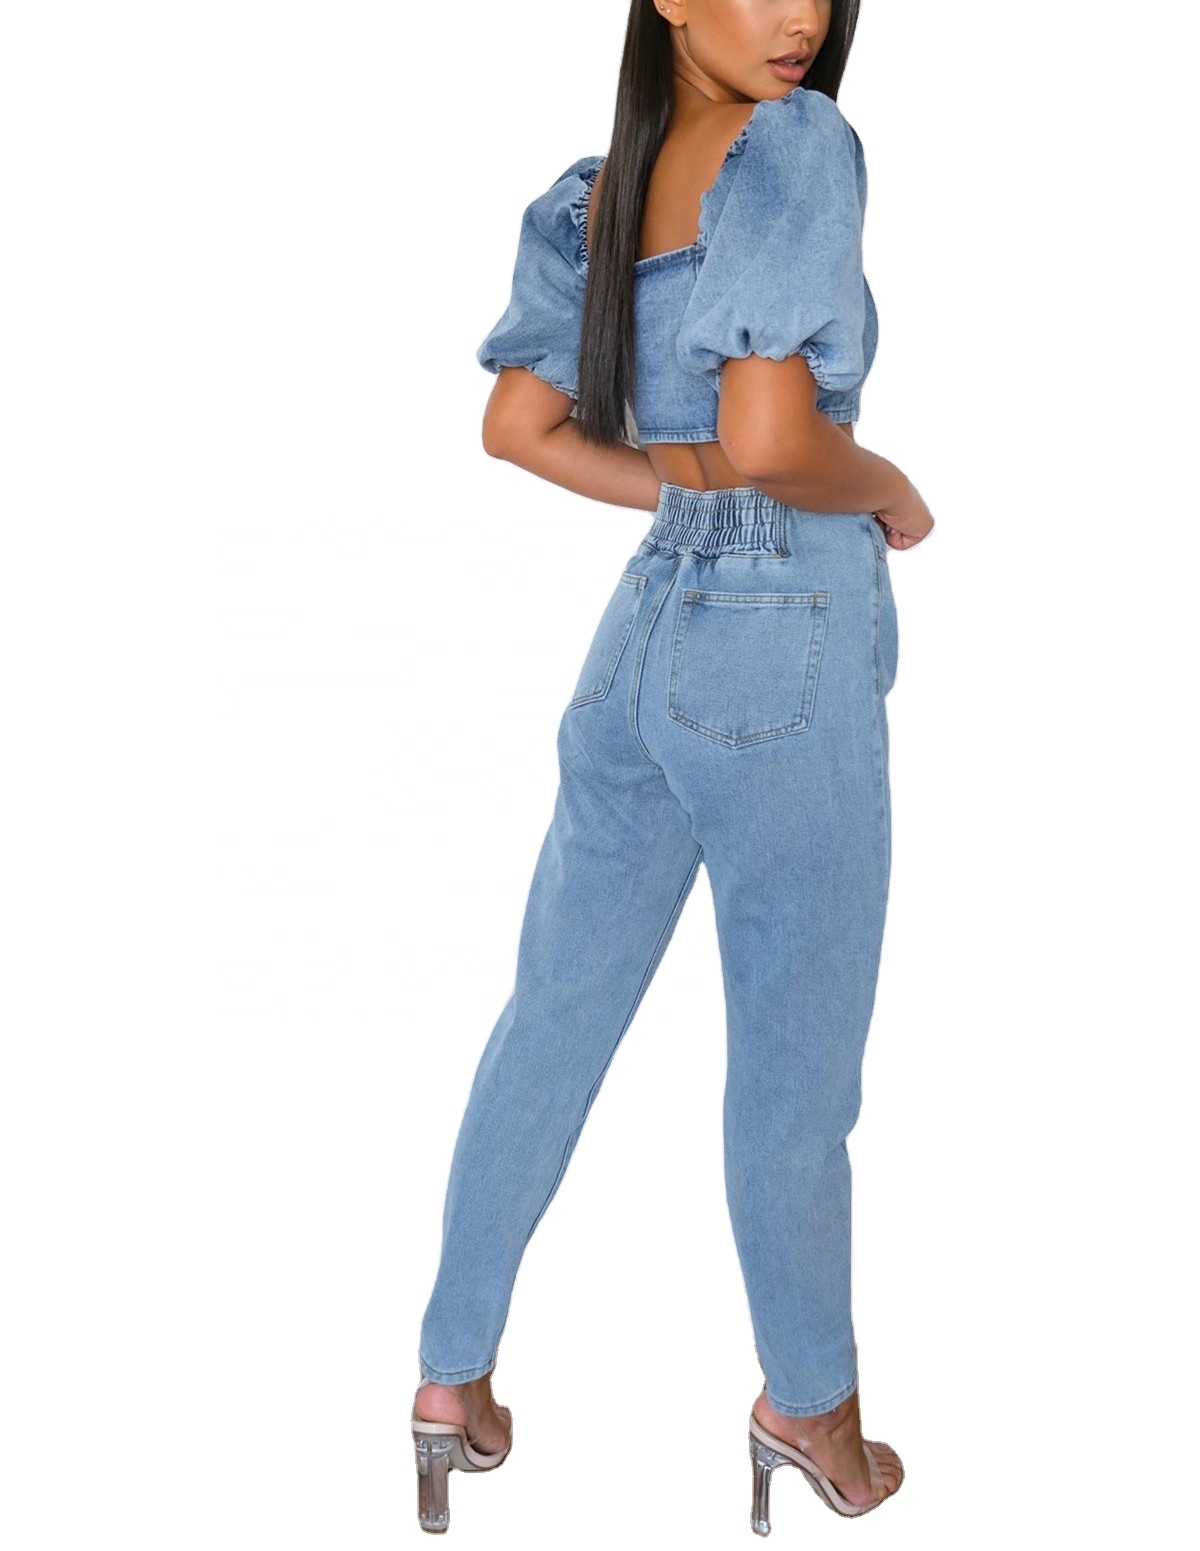 2020 retro style women denim jeans high rise bootcut slim fit flare women jeans